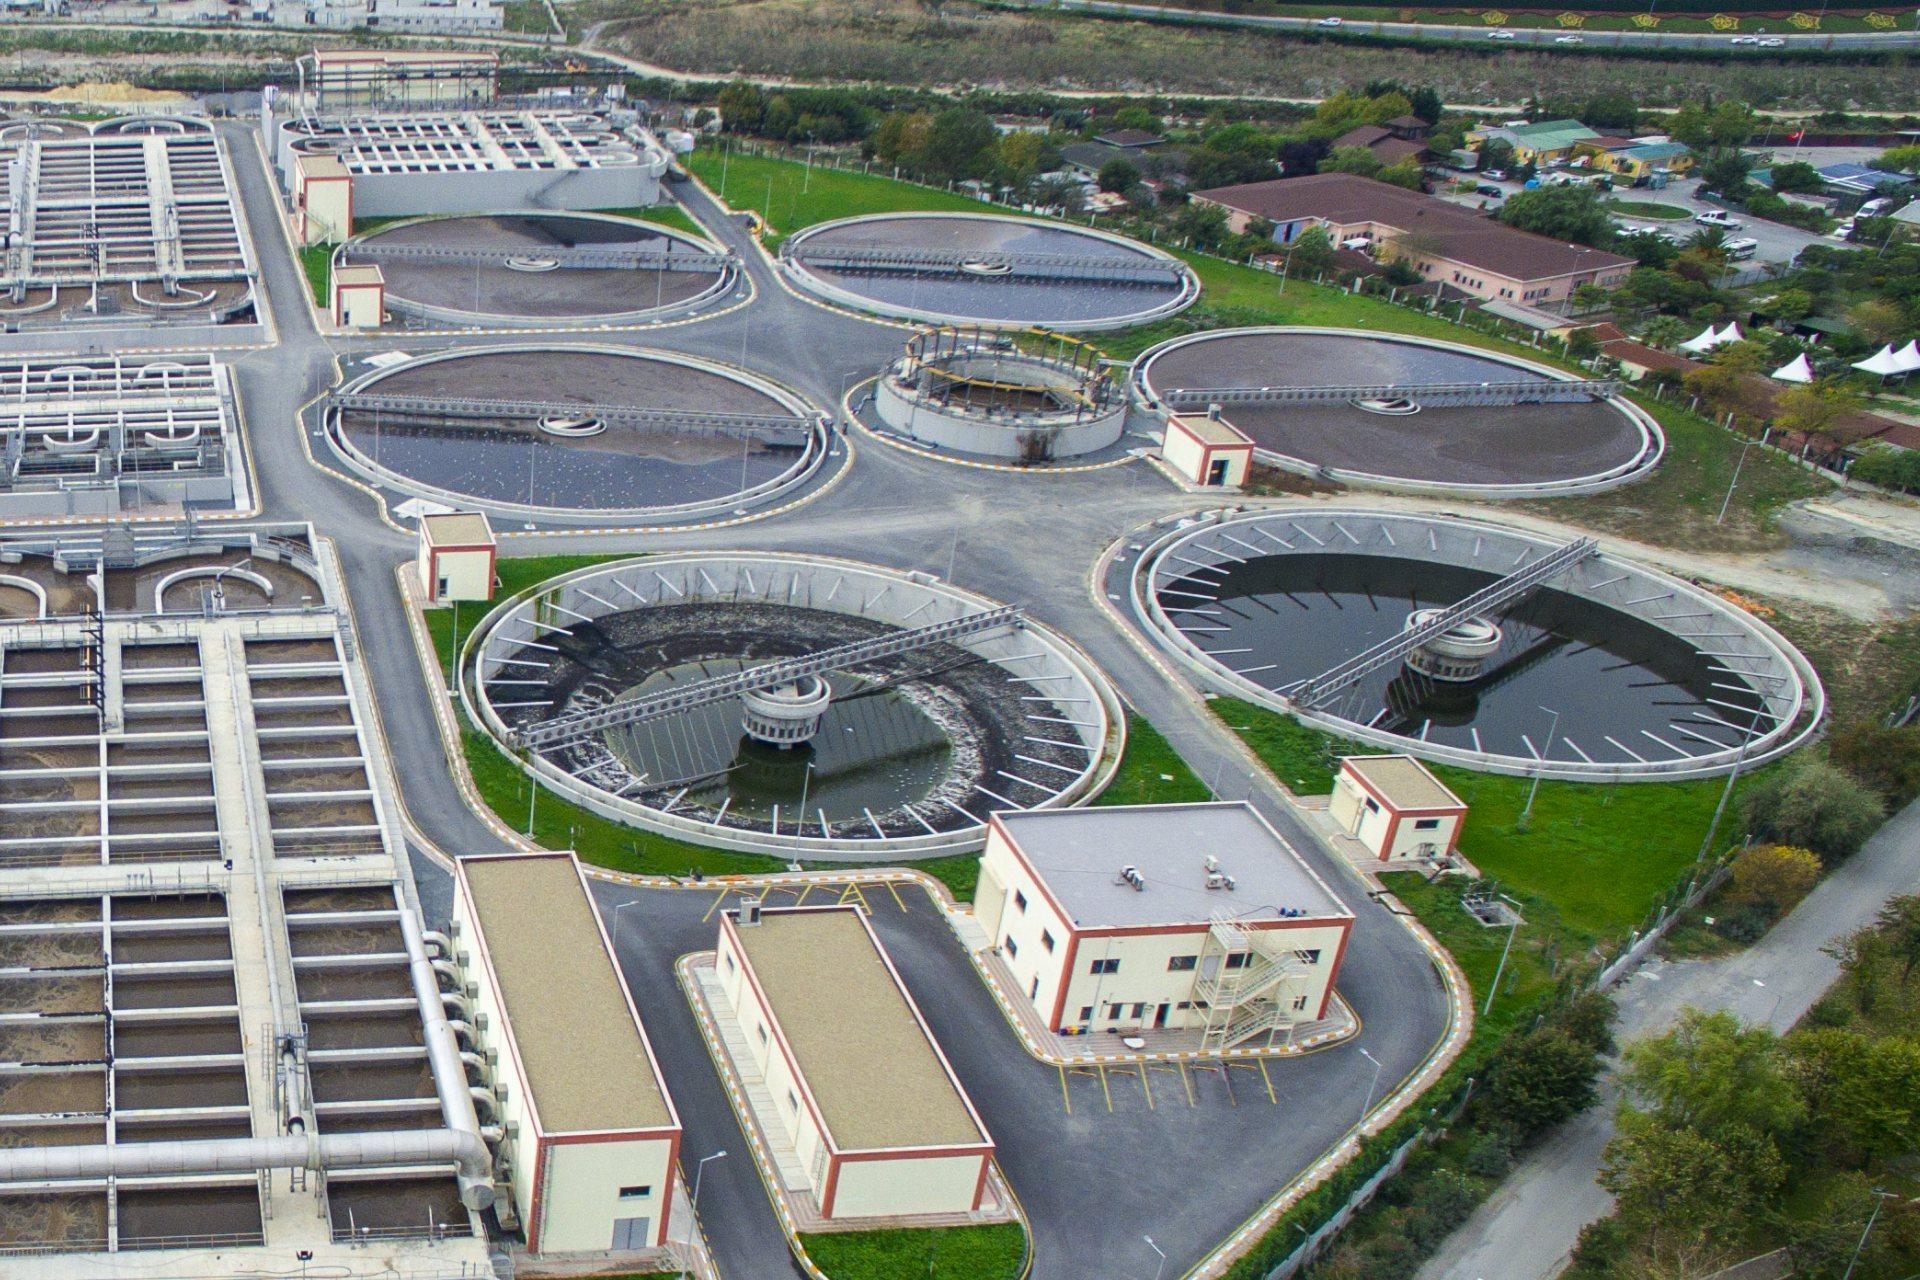 Yenikapi Waste Water Treatment Plant